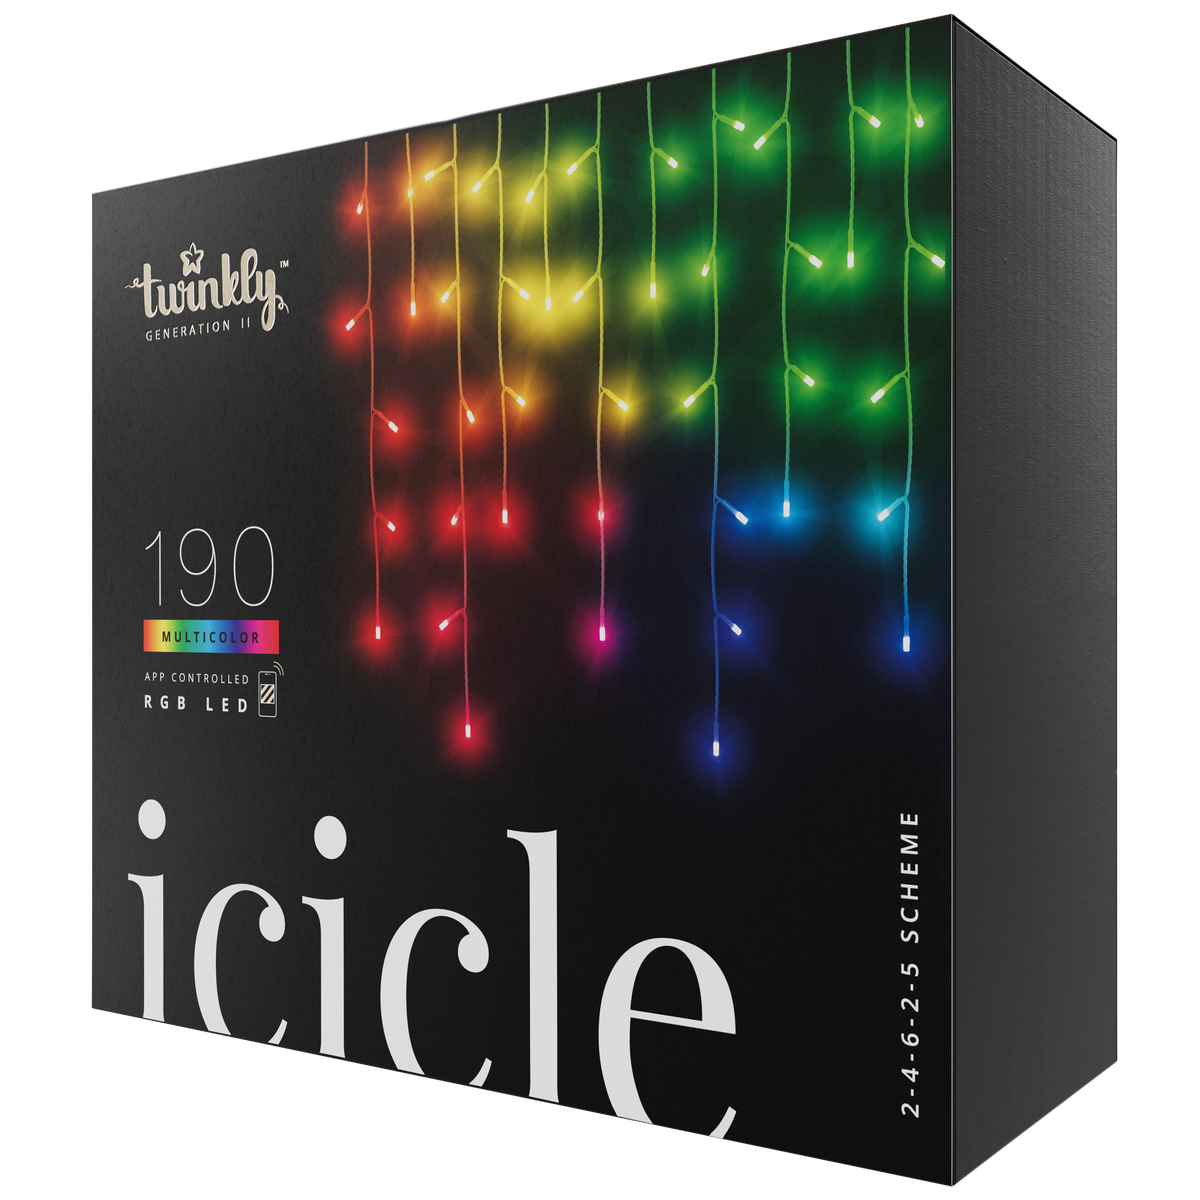 Icicle (monivärinen painos)